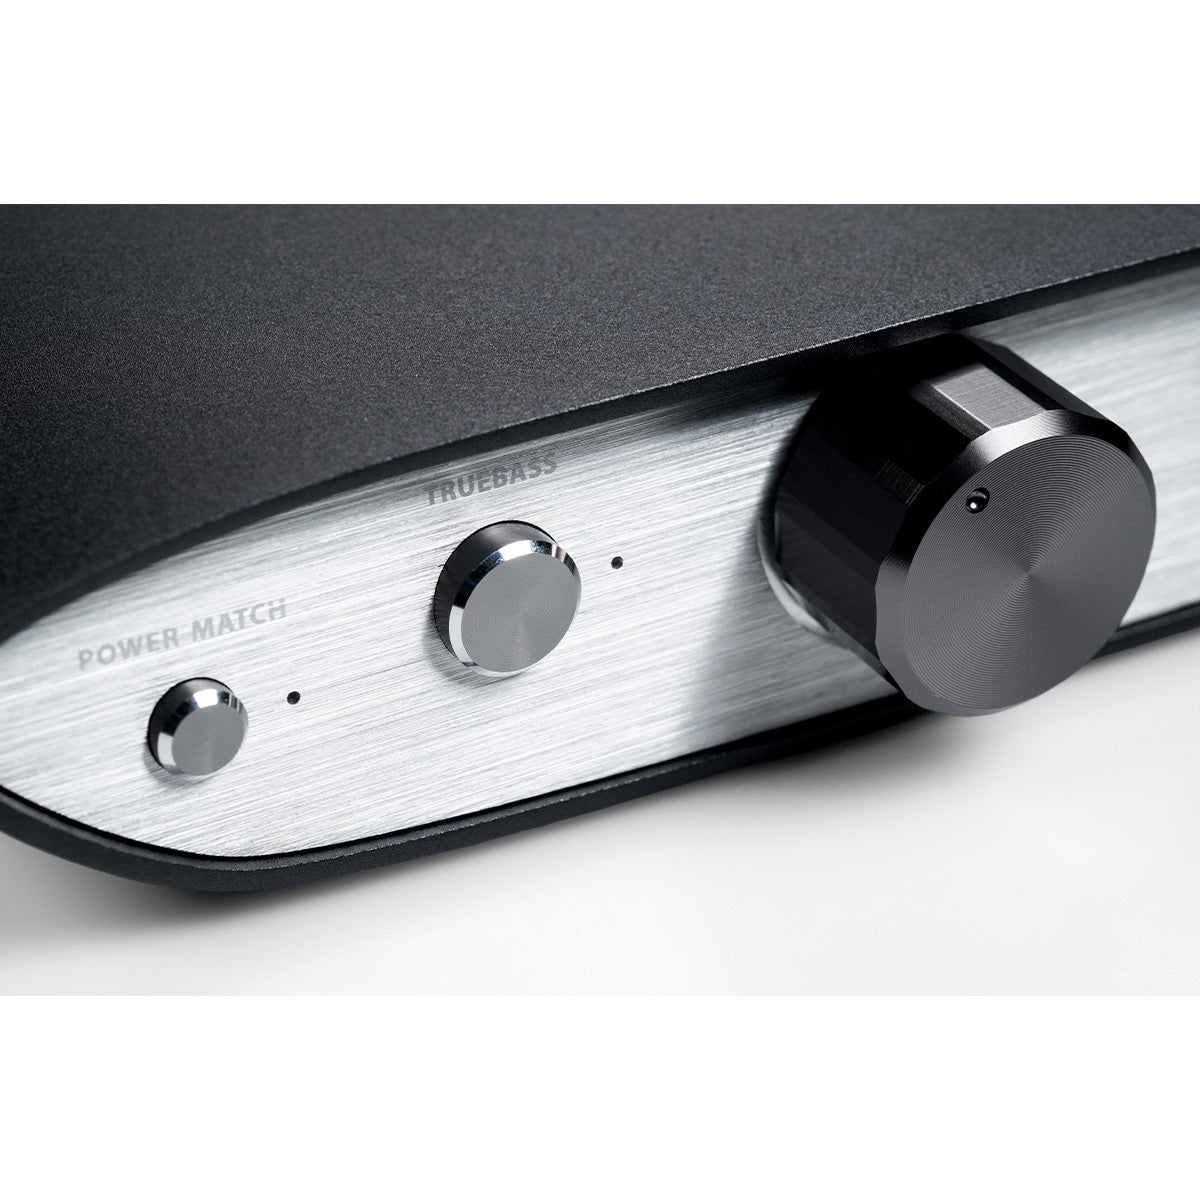 iFi Audio ZEN DAC Desktop USB DAC and headphone amplifier at